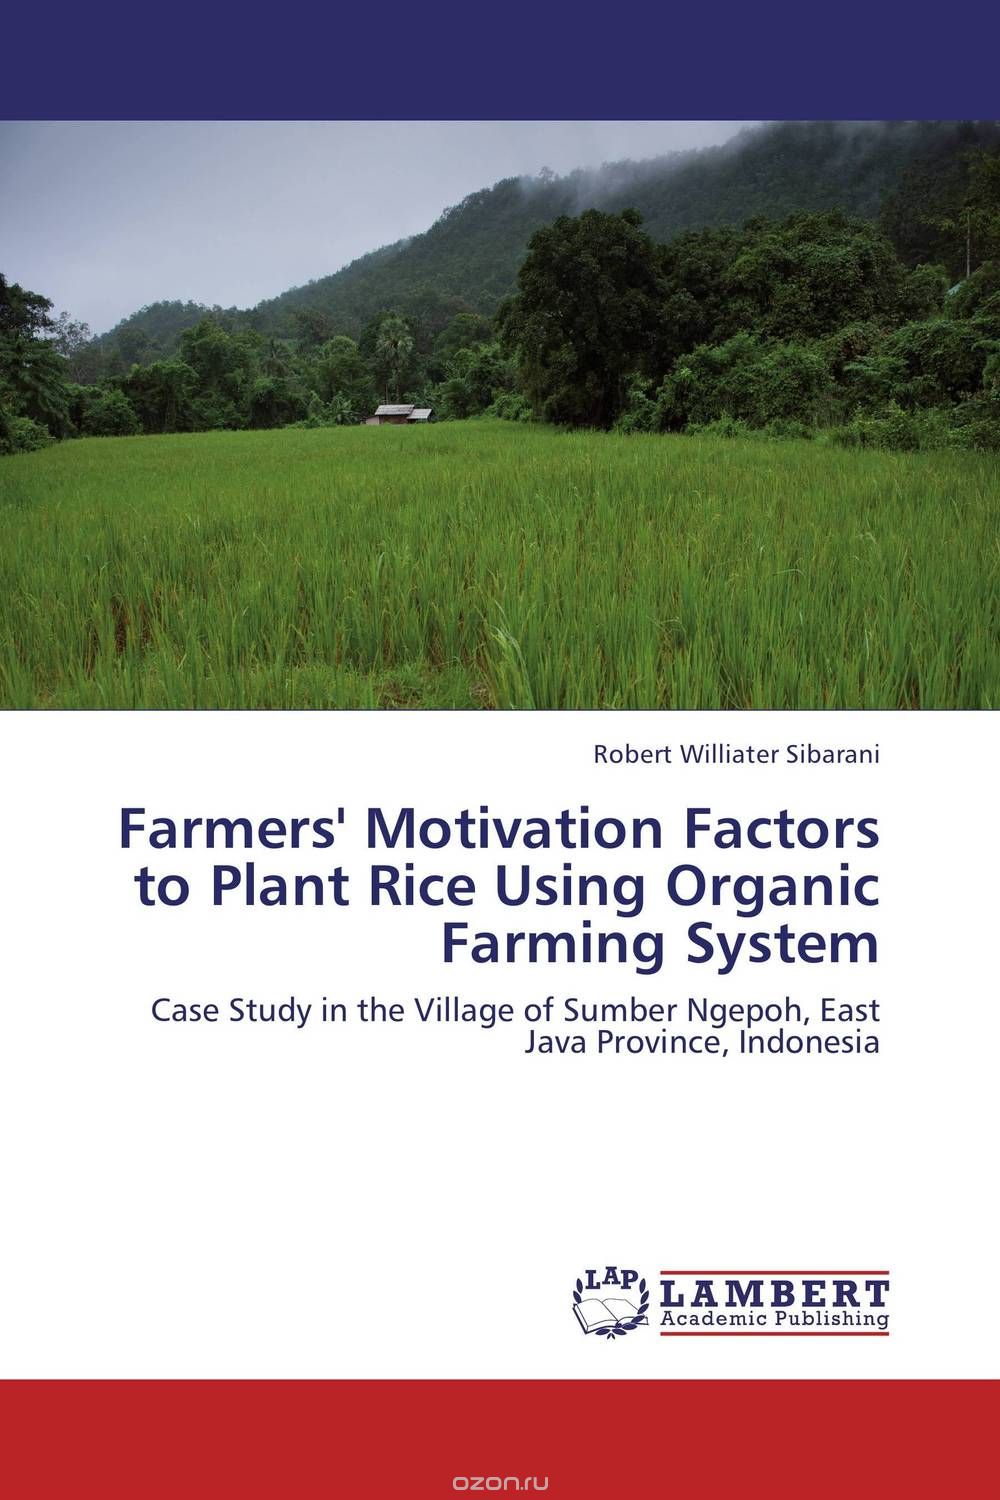 Скачать книгу "Farmers' Motivation Factors to Plant Rice Using Organic Farming System"